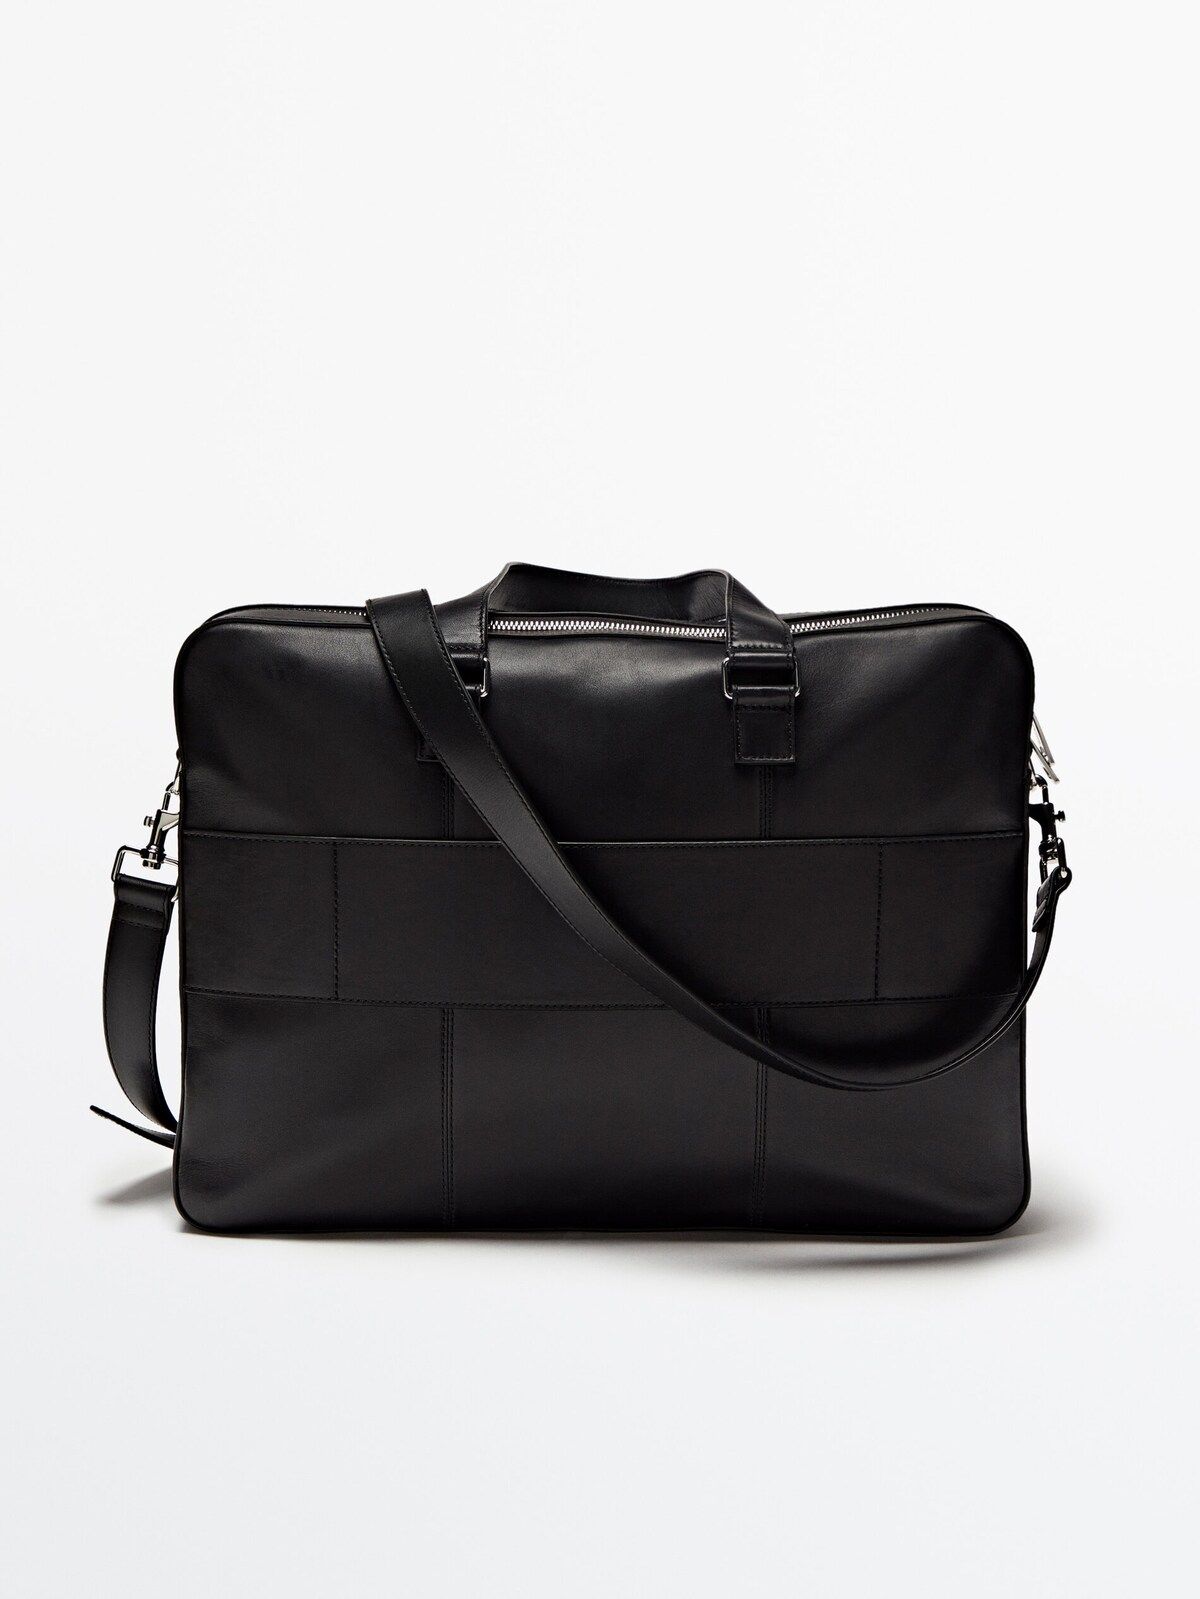 Black leather briefcase | Massimo Dutti (US)